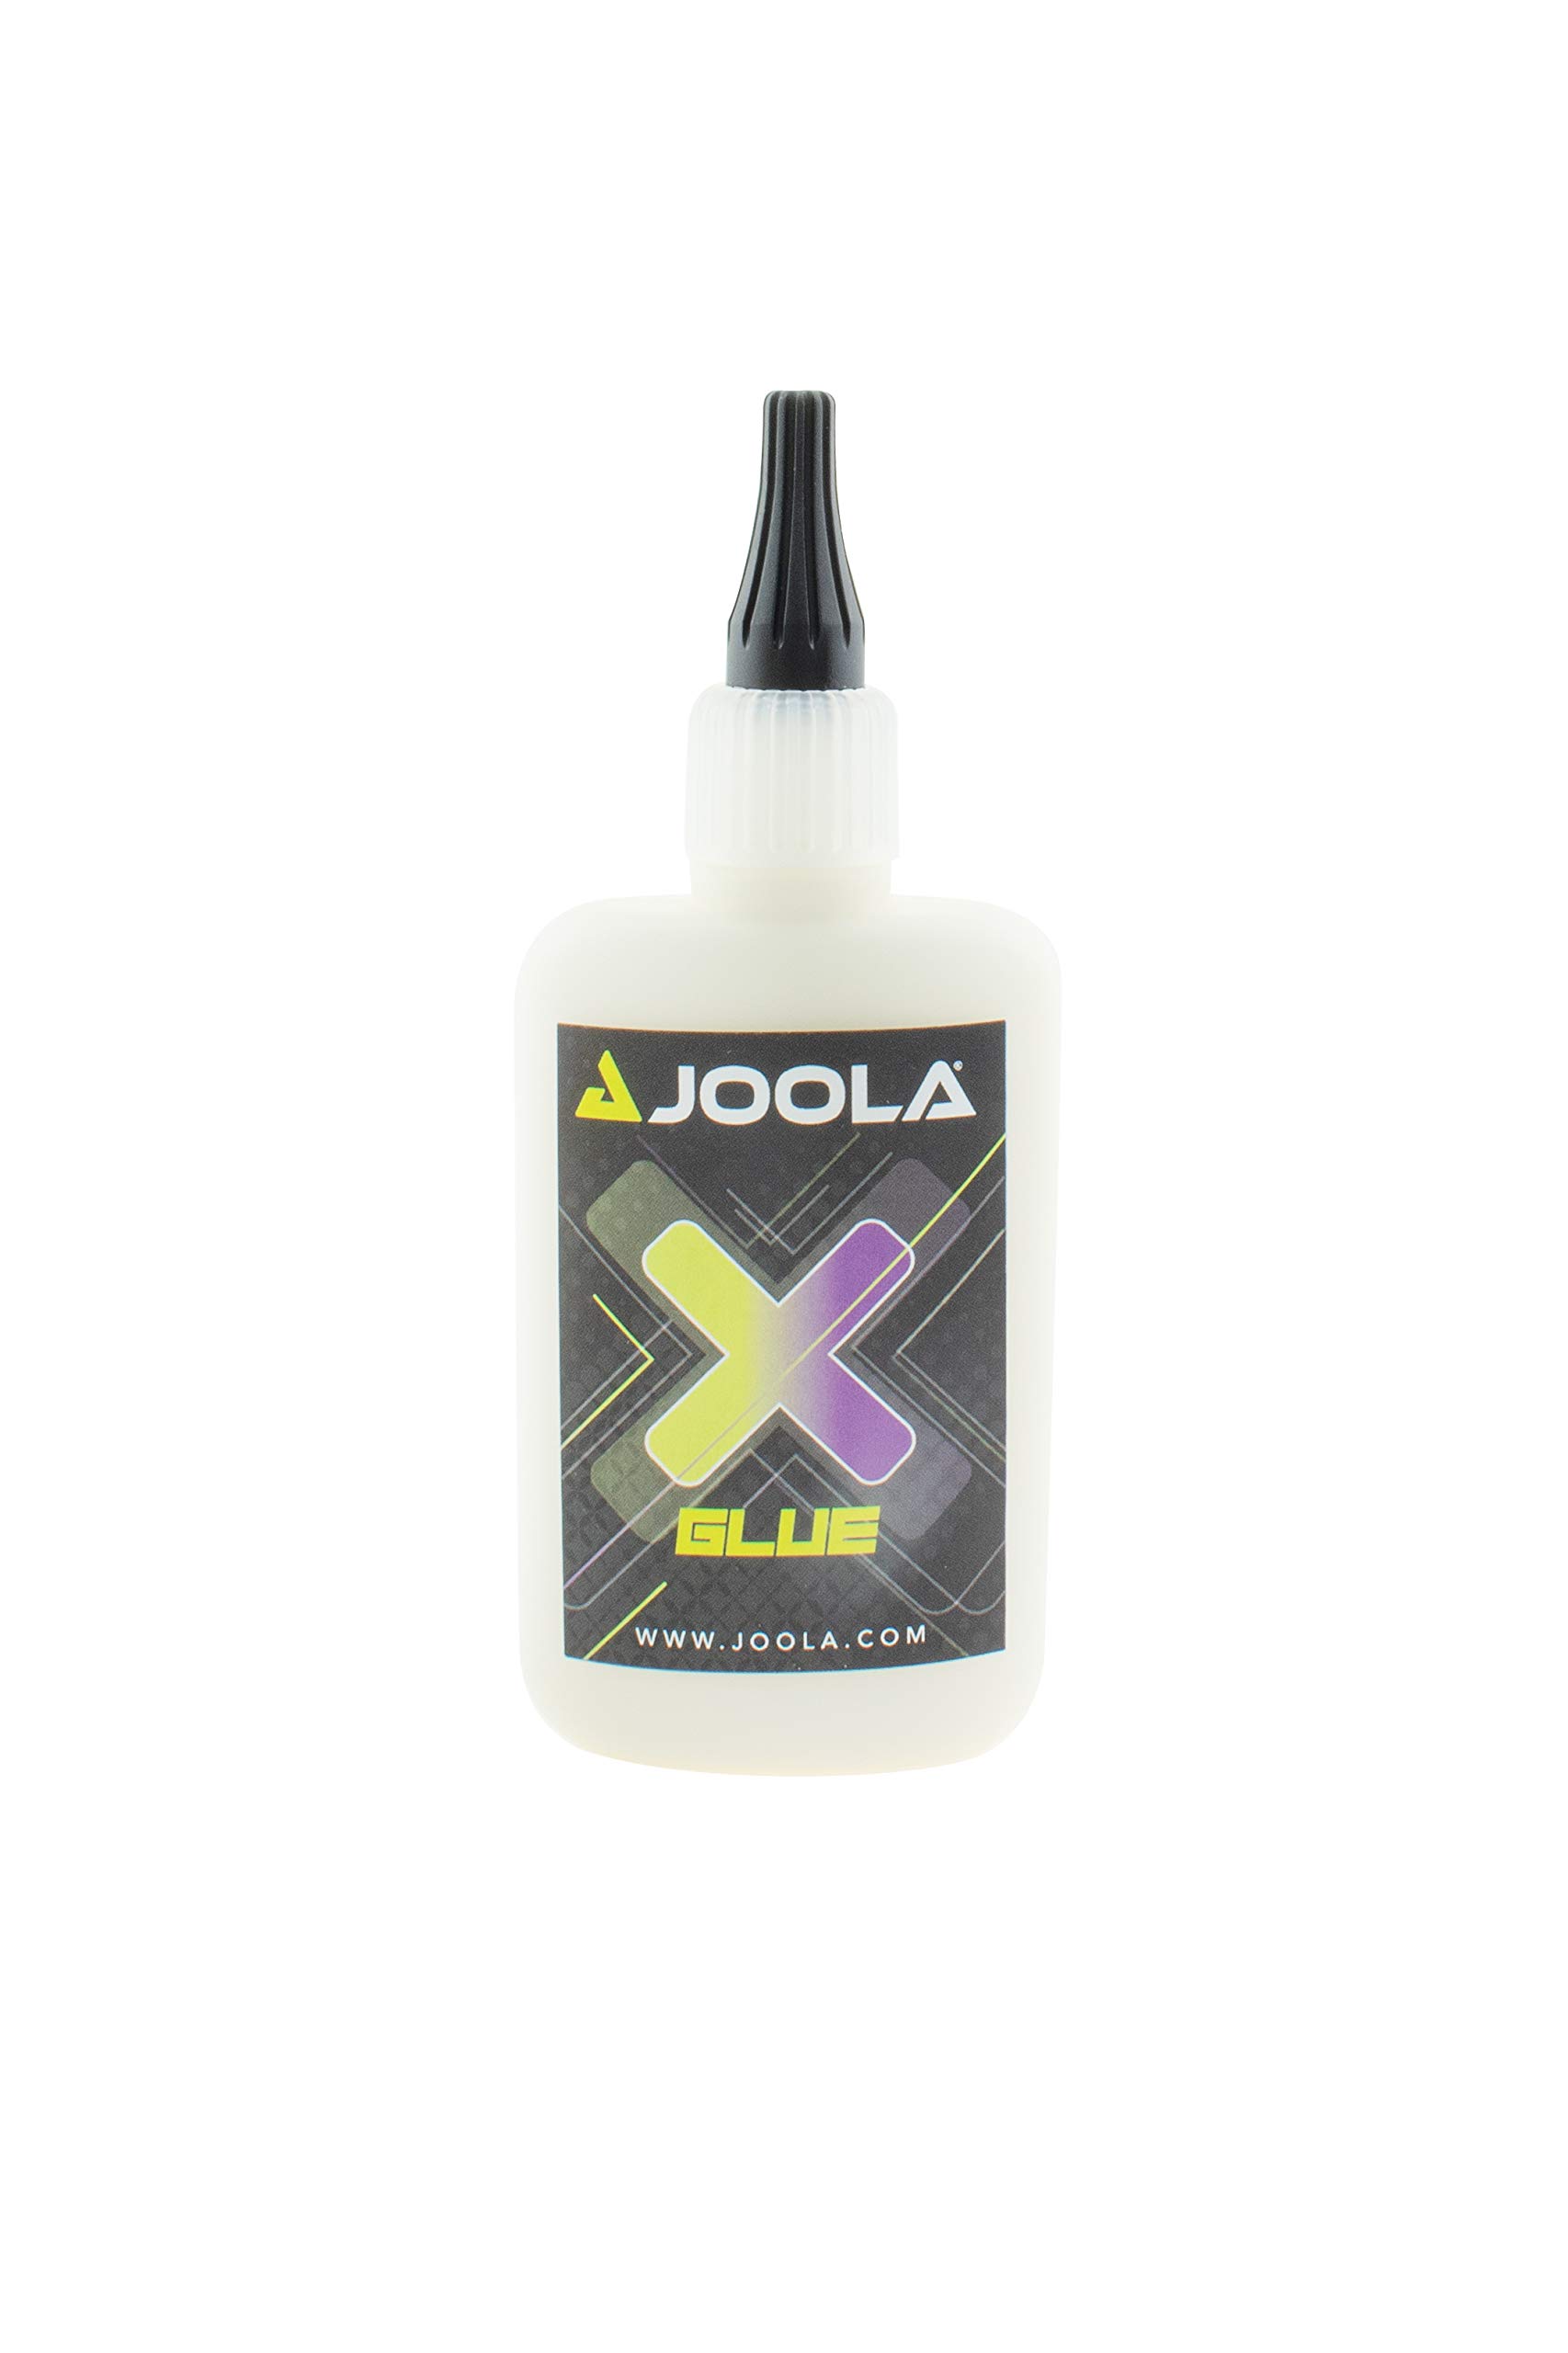 JOOLA Water Bottle - JOOLA USA